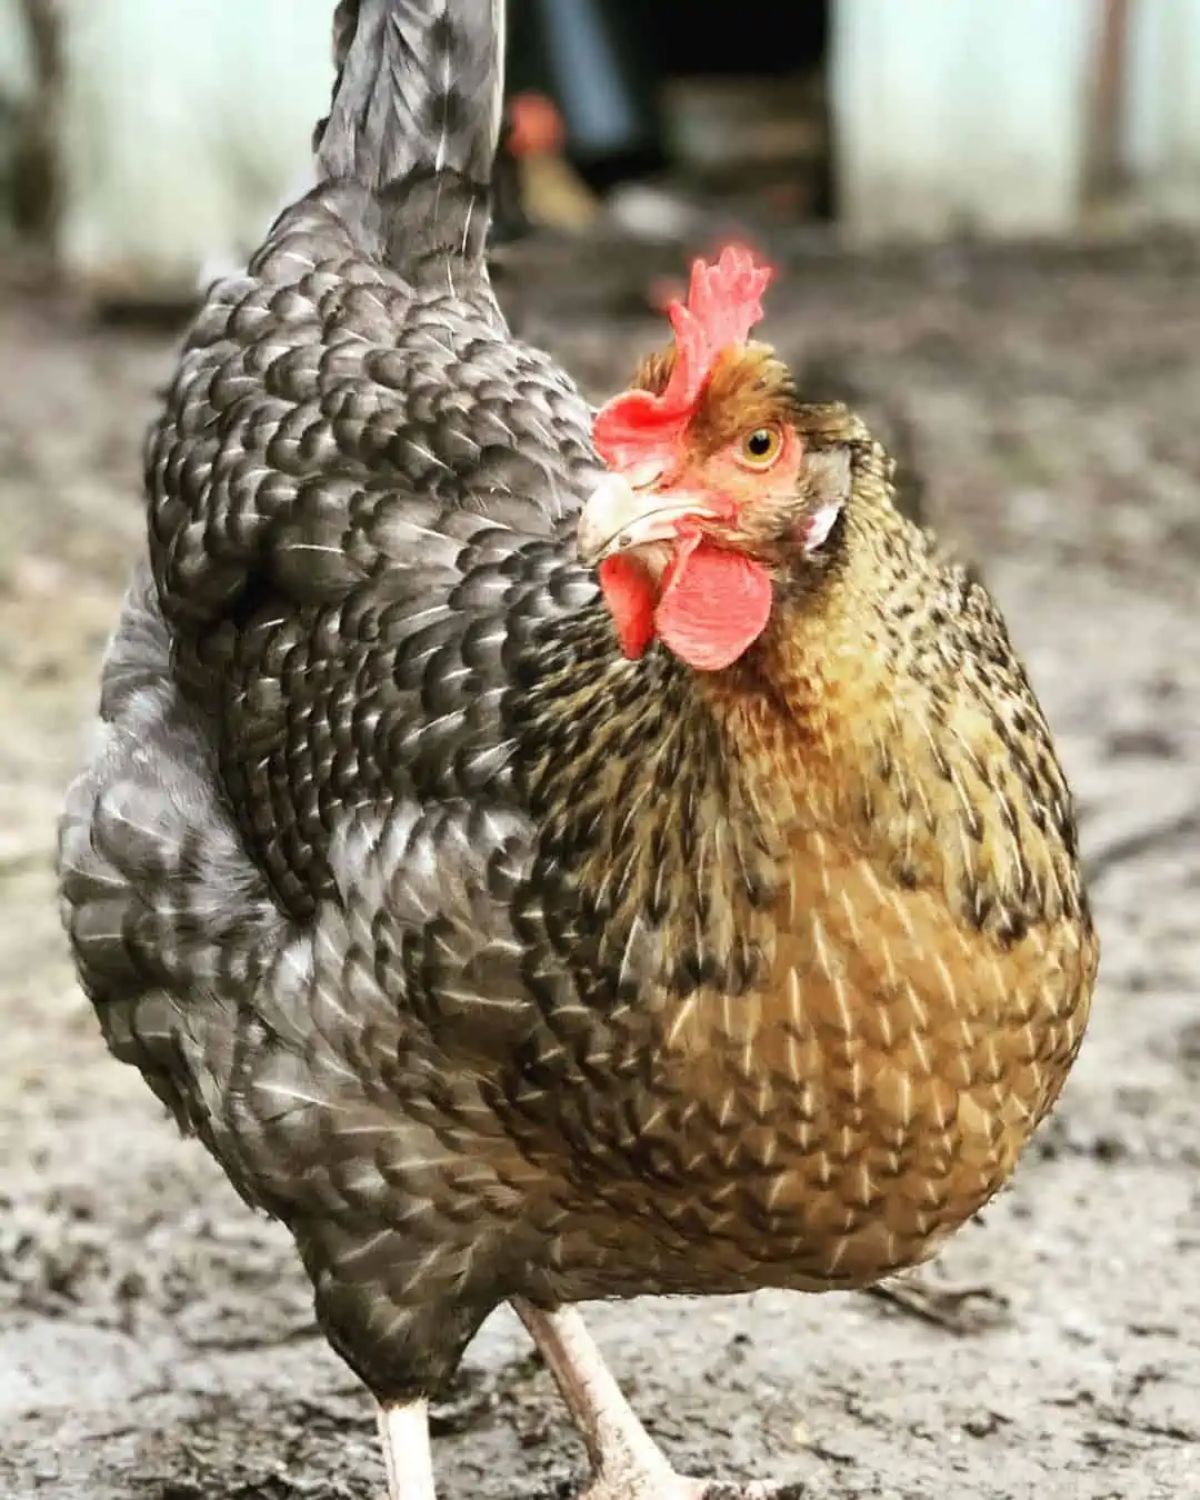 A close-up of a Penedesenca Chicken.